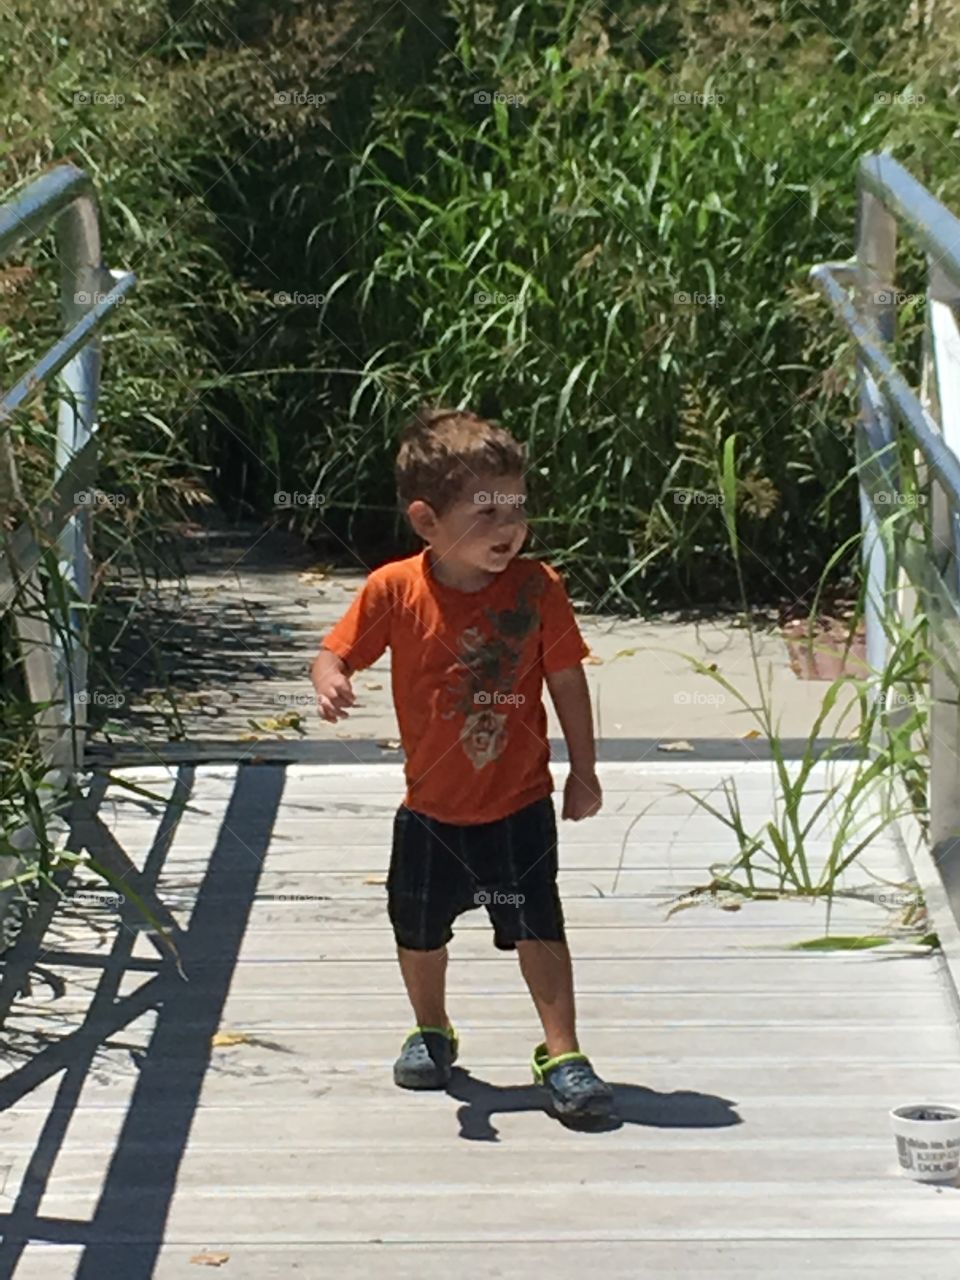 He's walking the dock 